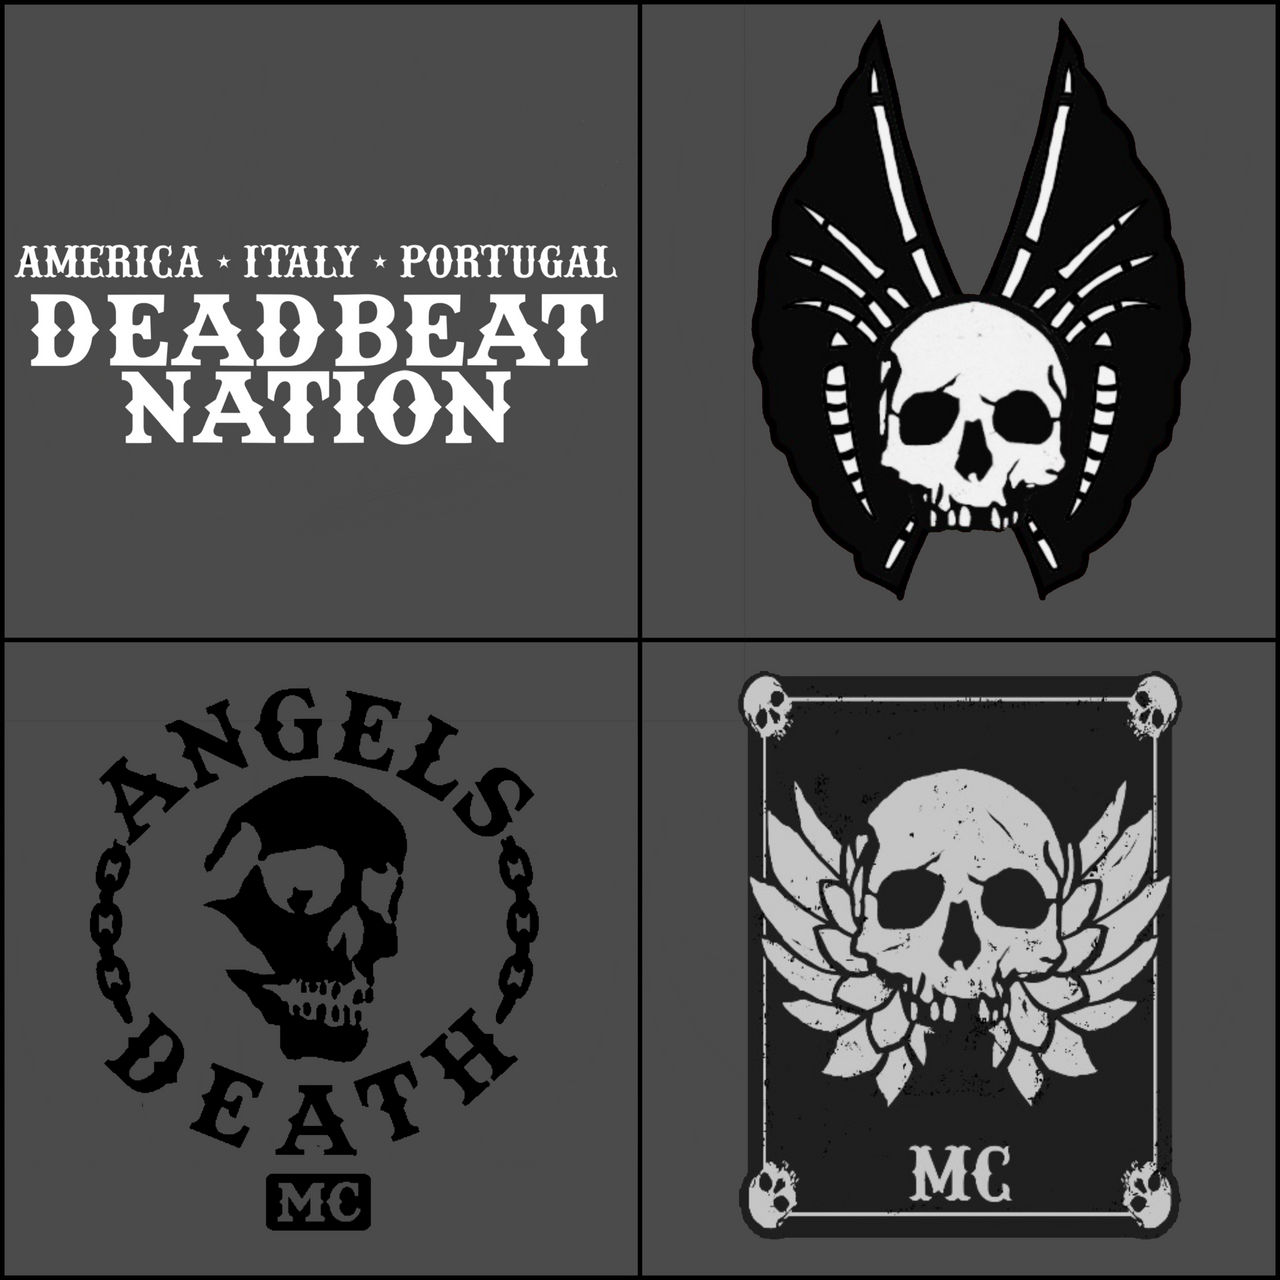 GTAV: Angels Of Death MC Logo Set 2 by Clutit on DeviantArt